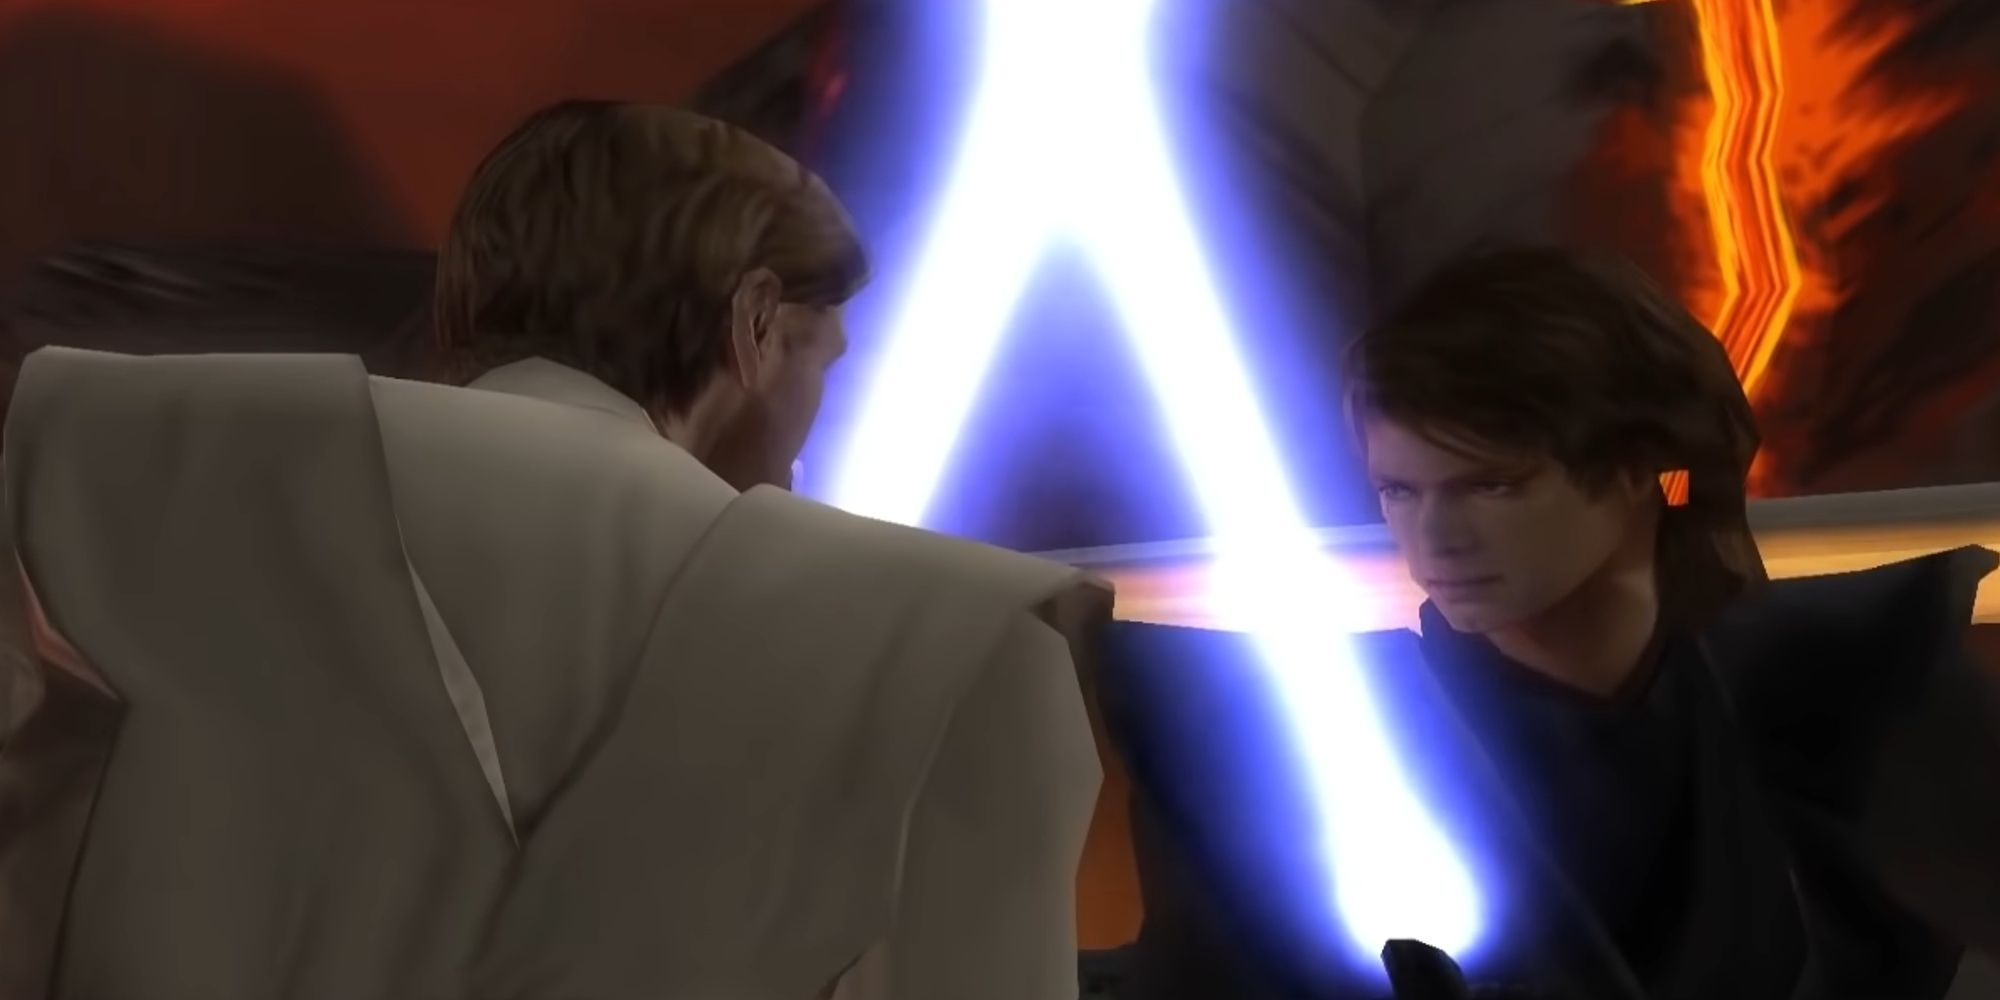 Obi Wan Kenobi fighting Anakin Skywalker on Mustafar in the Revenge Of The Sith game